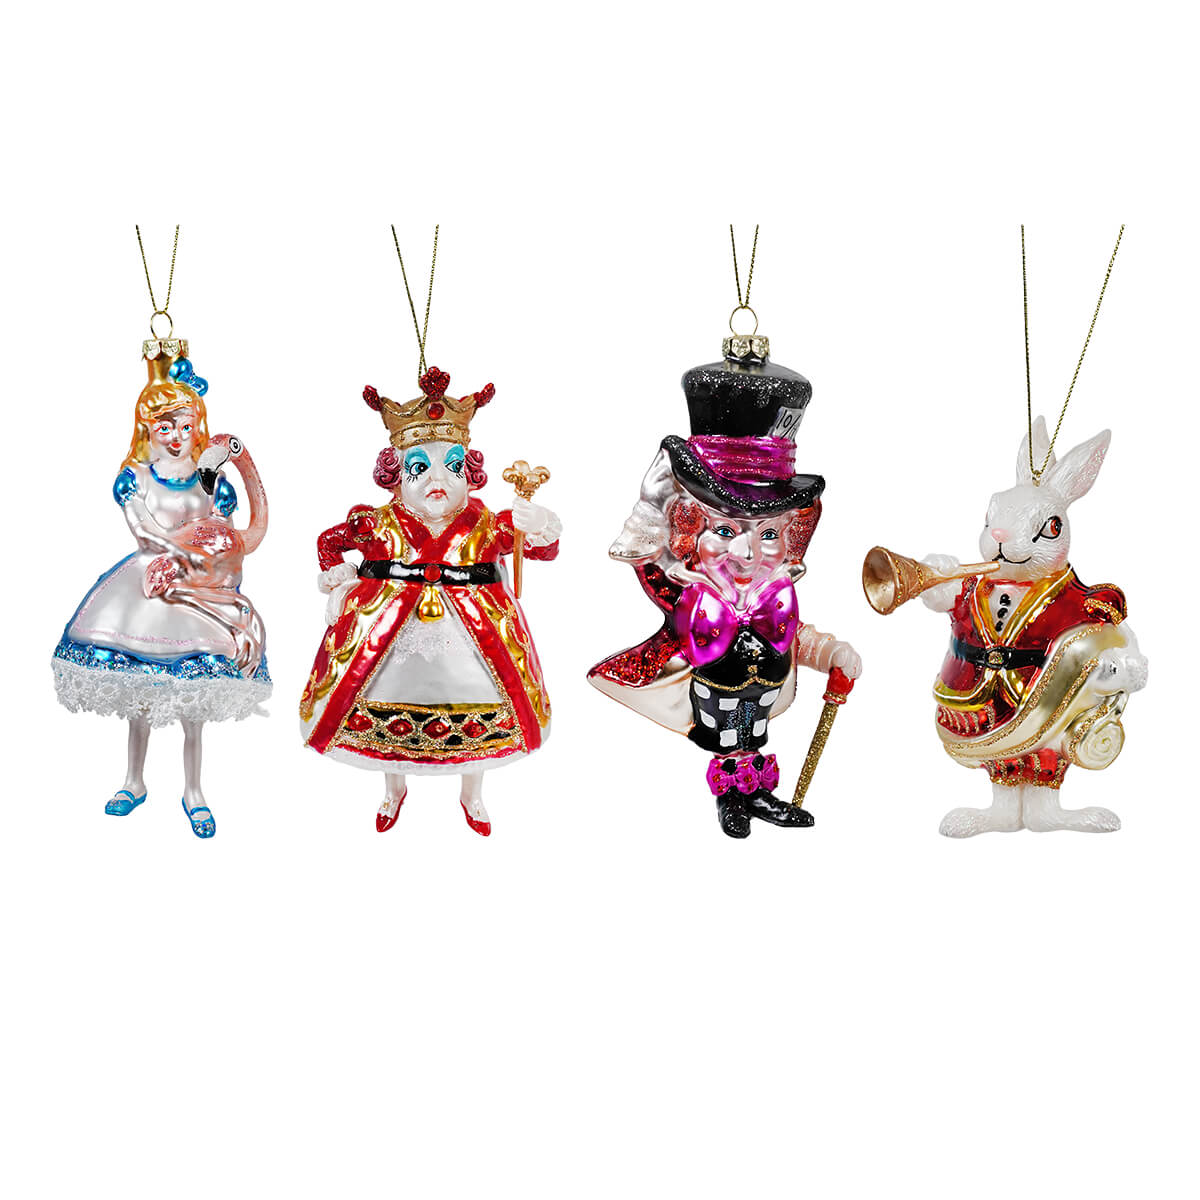 Buy the Pair of Department 56 Alice in Wonderland Ornaments